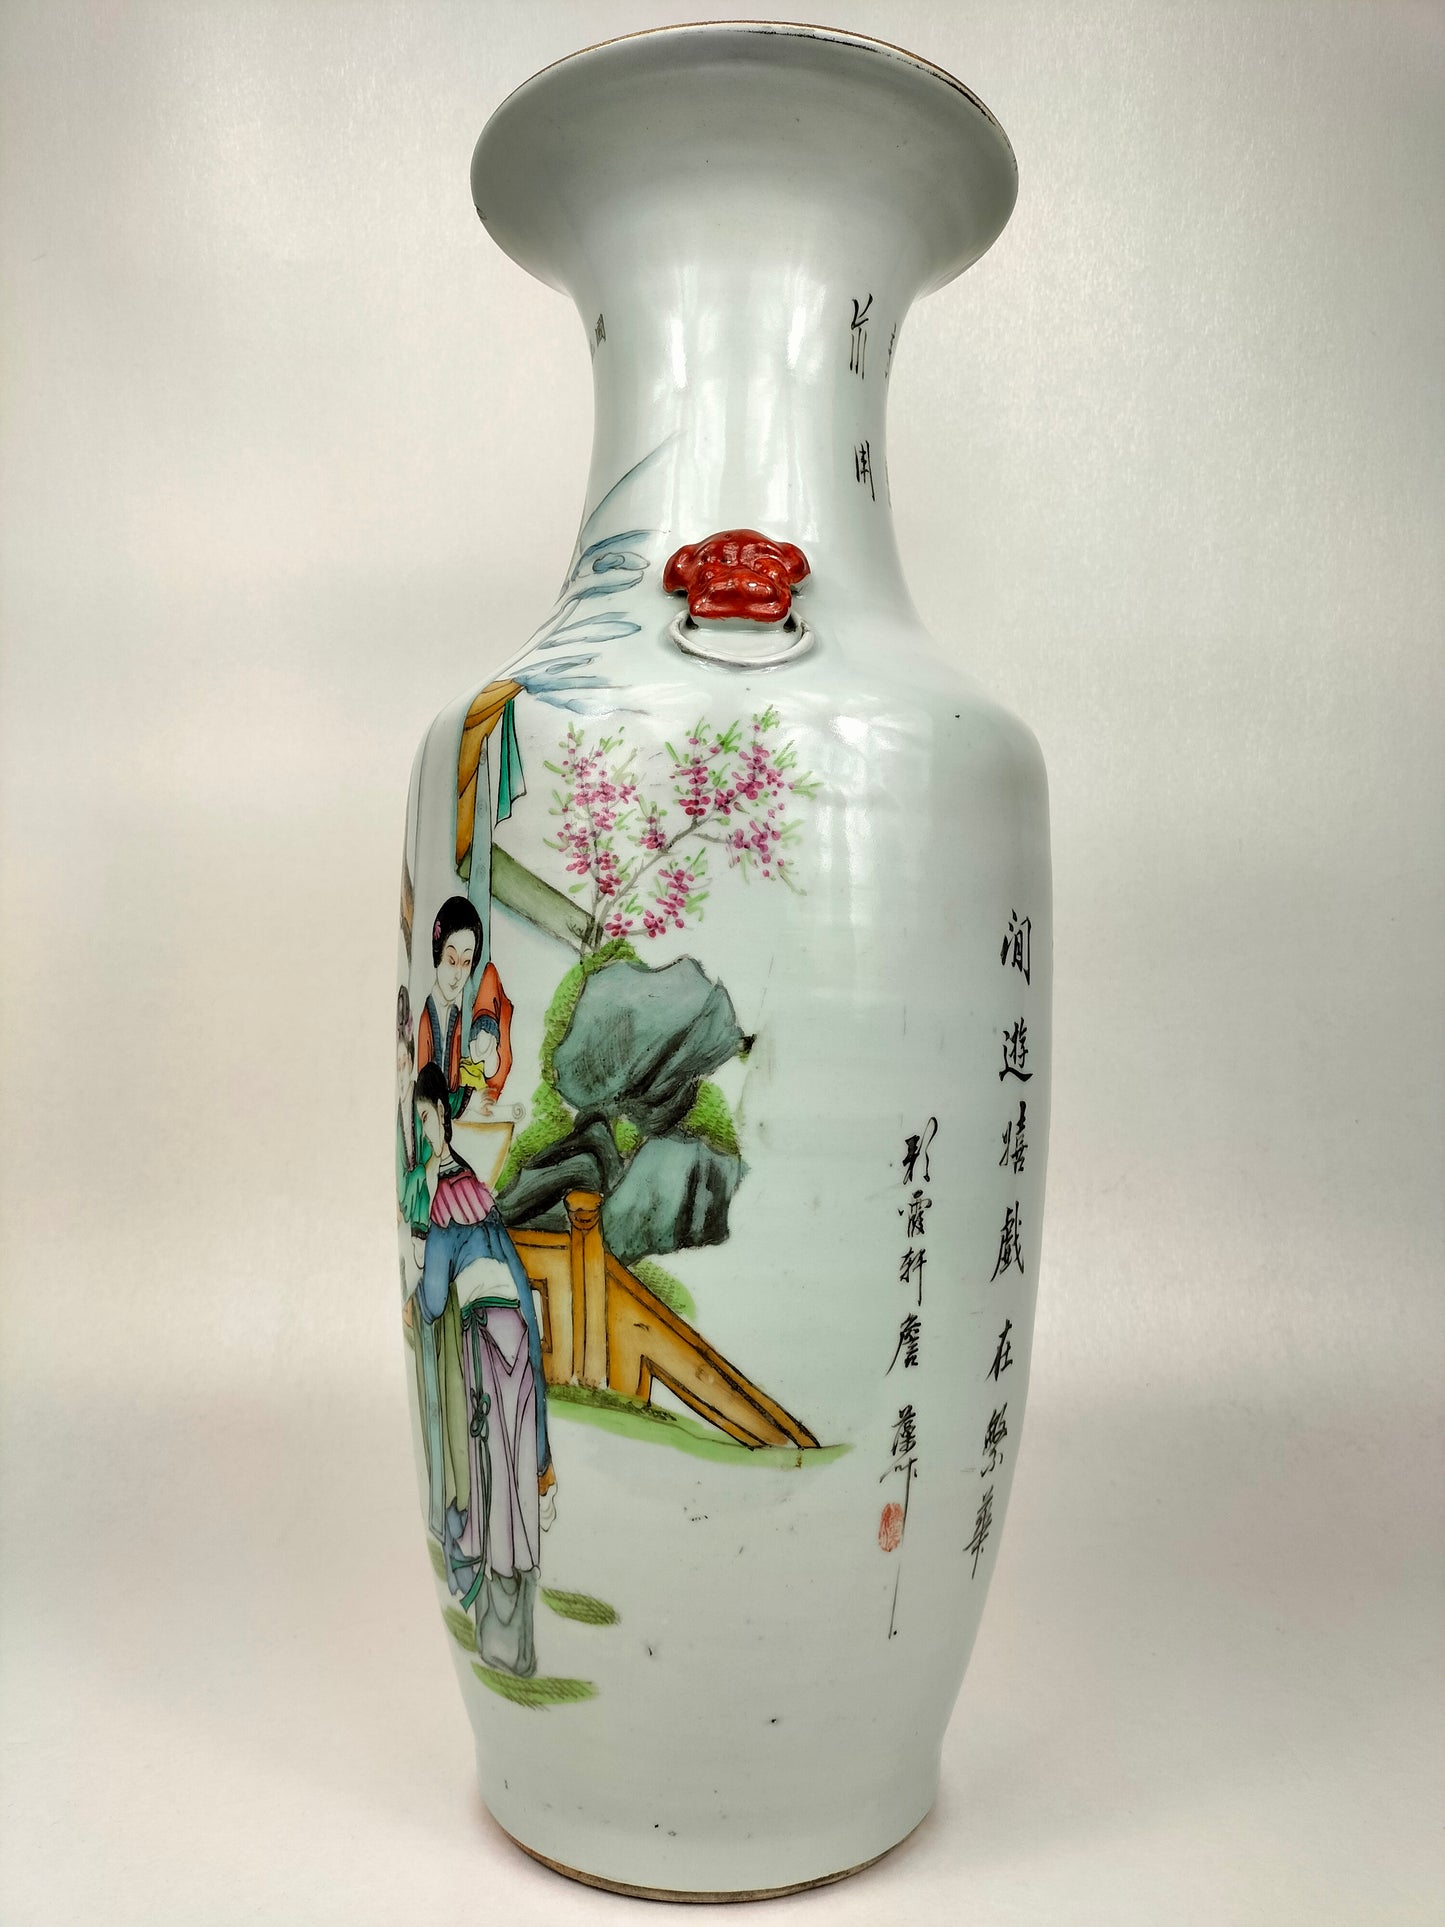 Grand vase antique chinois qianjiang cai // Période République (1912-1949)